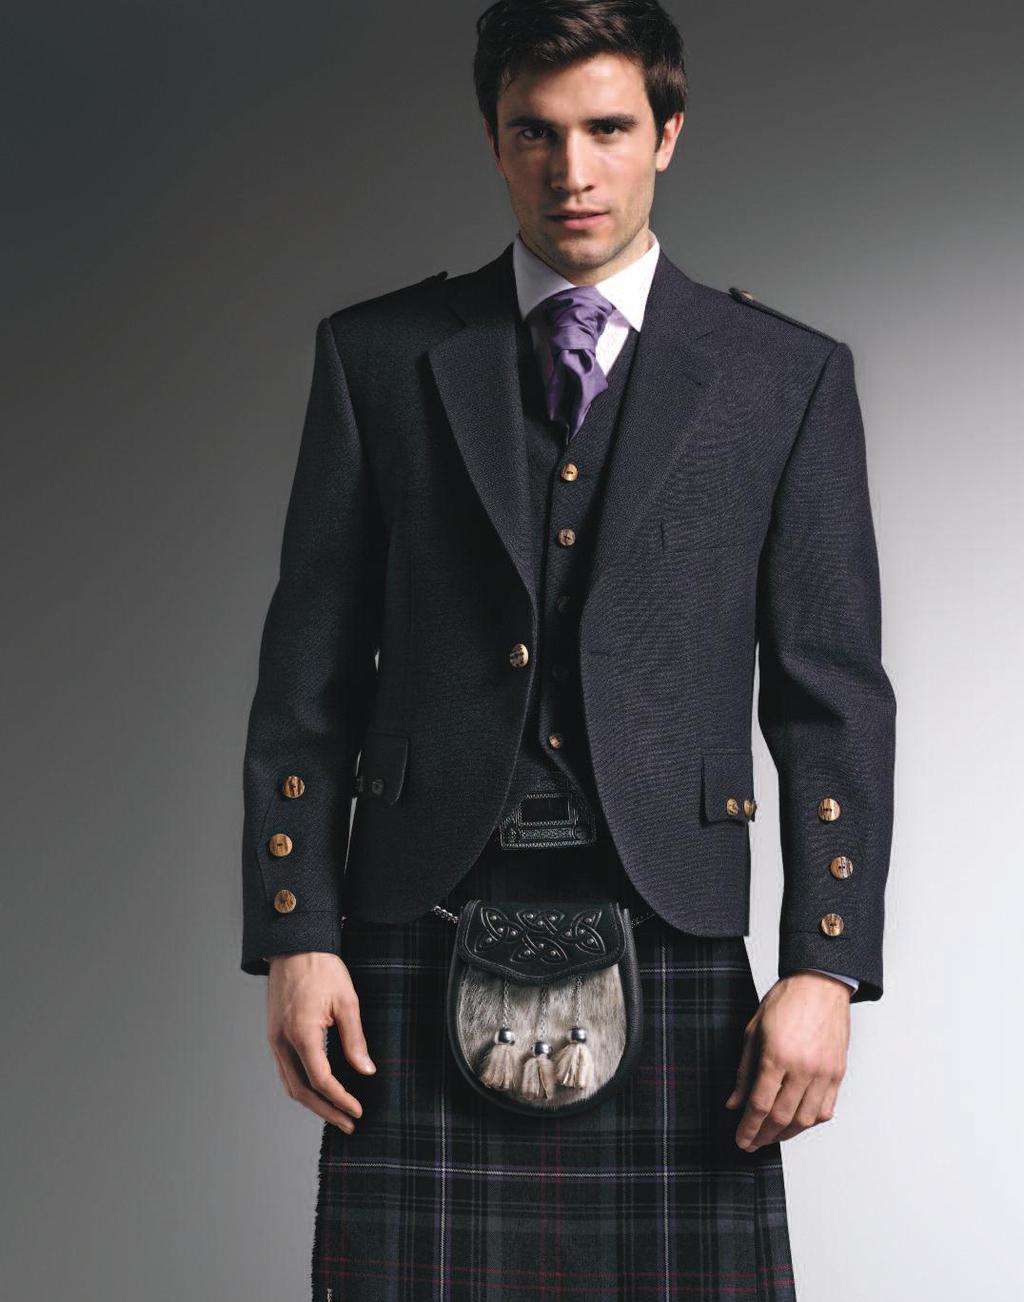 Scottish Spirit Kilt 6 Worn with Grey Tweed Jacket, matching